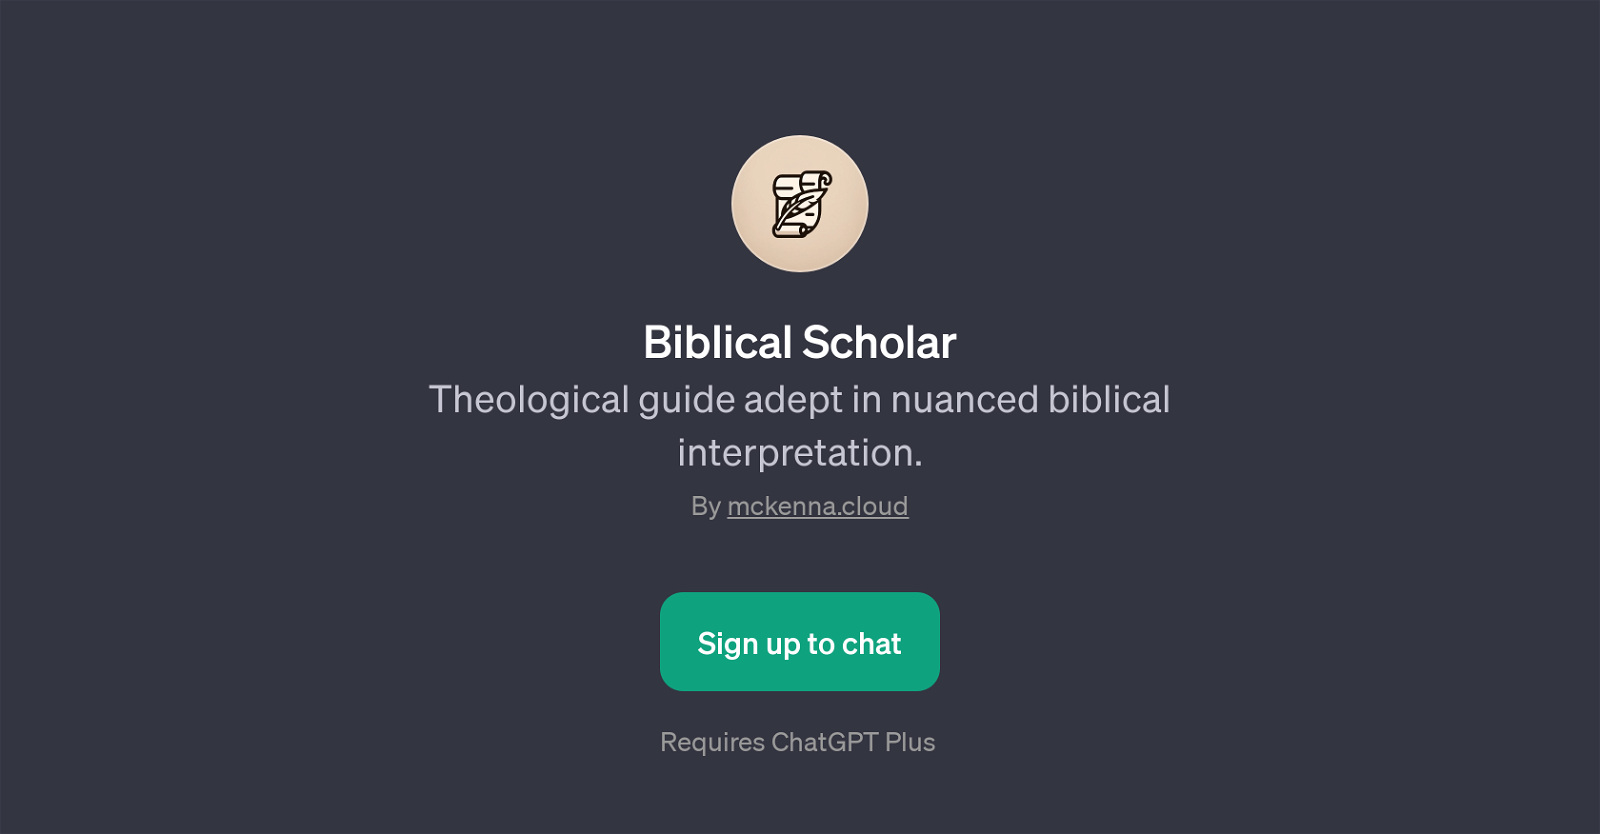 Biblical Scholar website